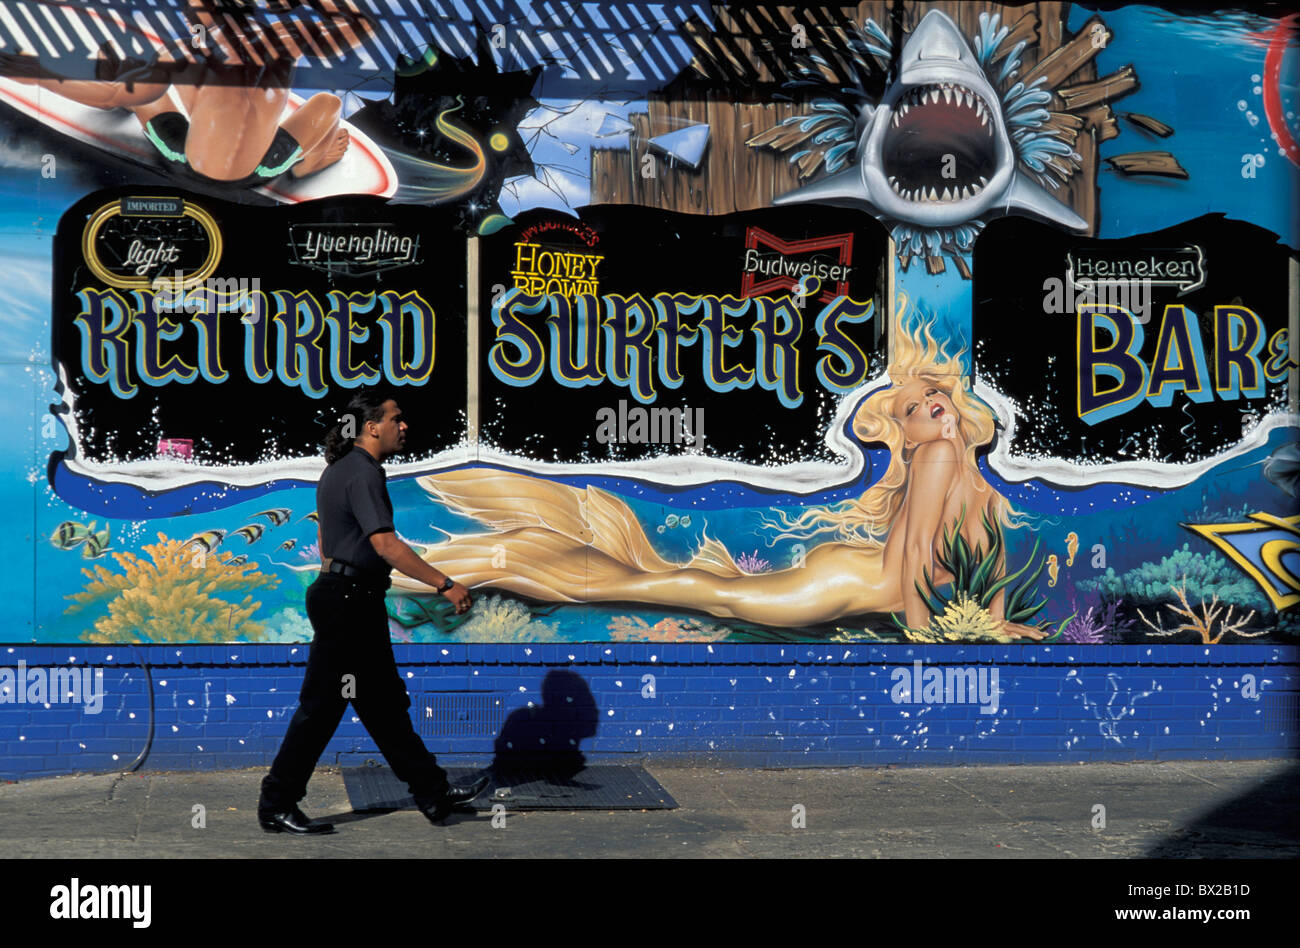 Surfer Bar graffiti wall painting advertisement advertisement man wall picture street scene South Street Phi Stock Photo